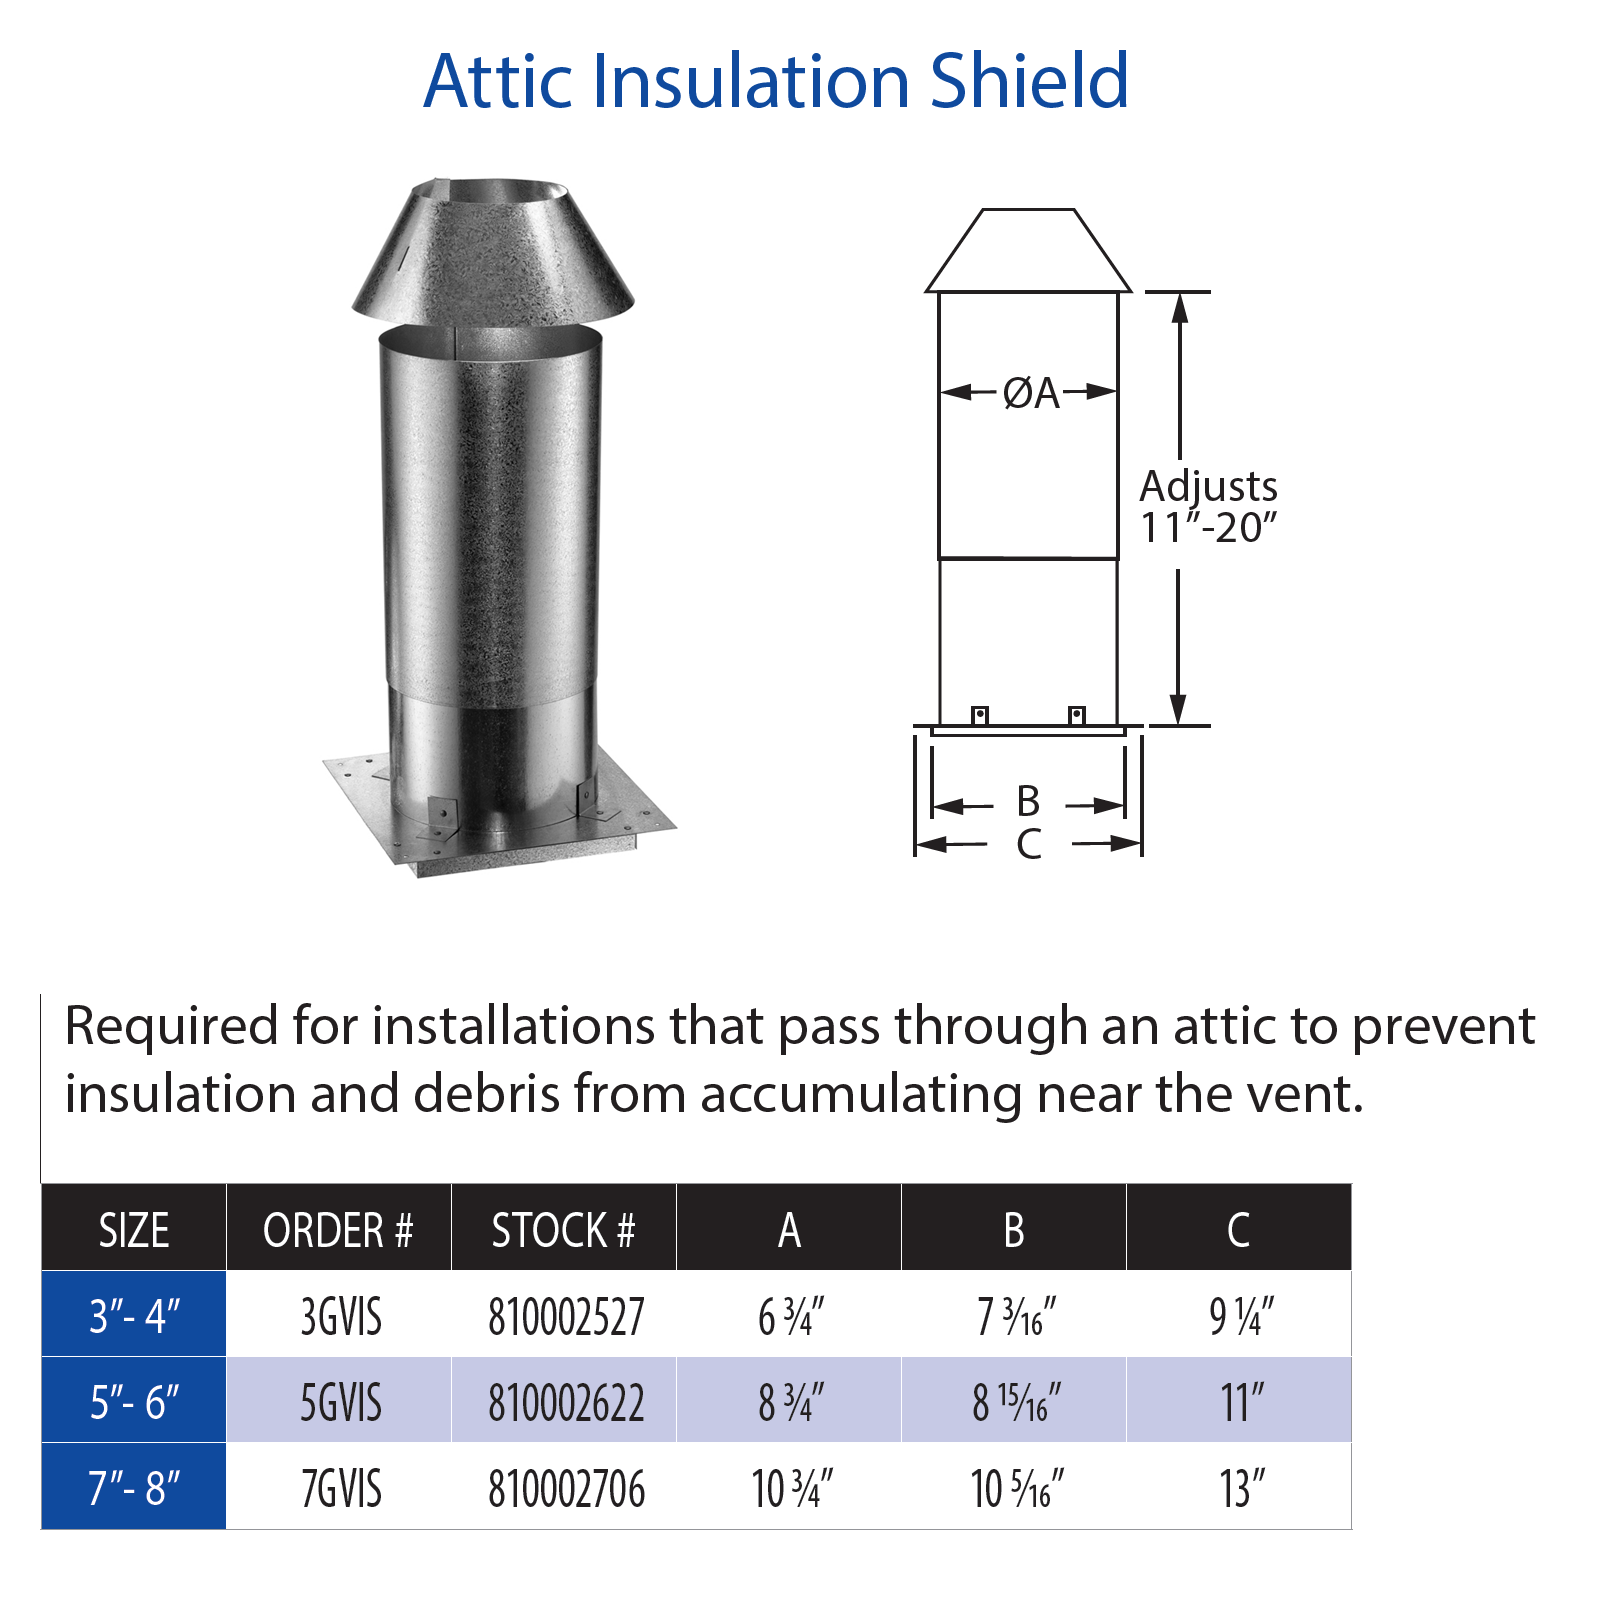 DuraVent Type B Attic Insulation Shield 3" - 4" | 3GVIS